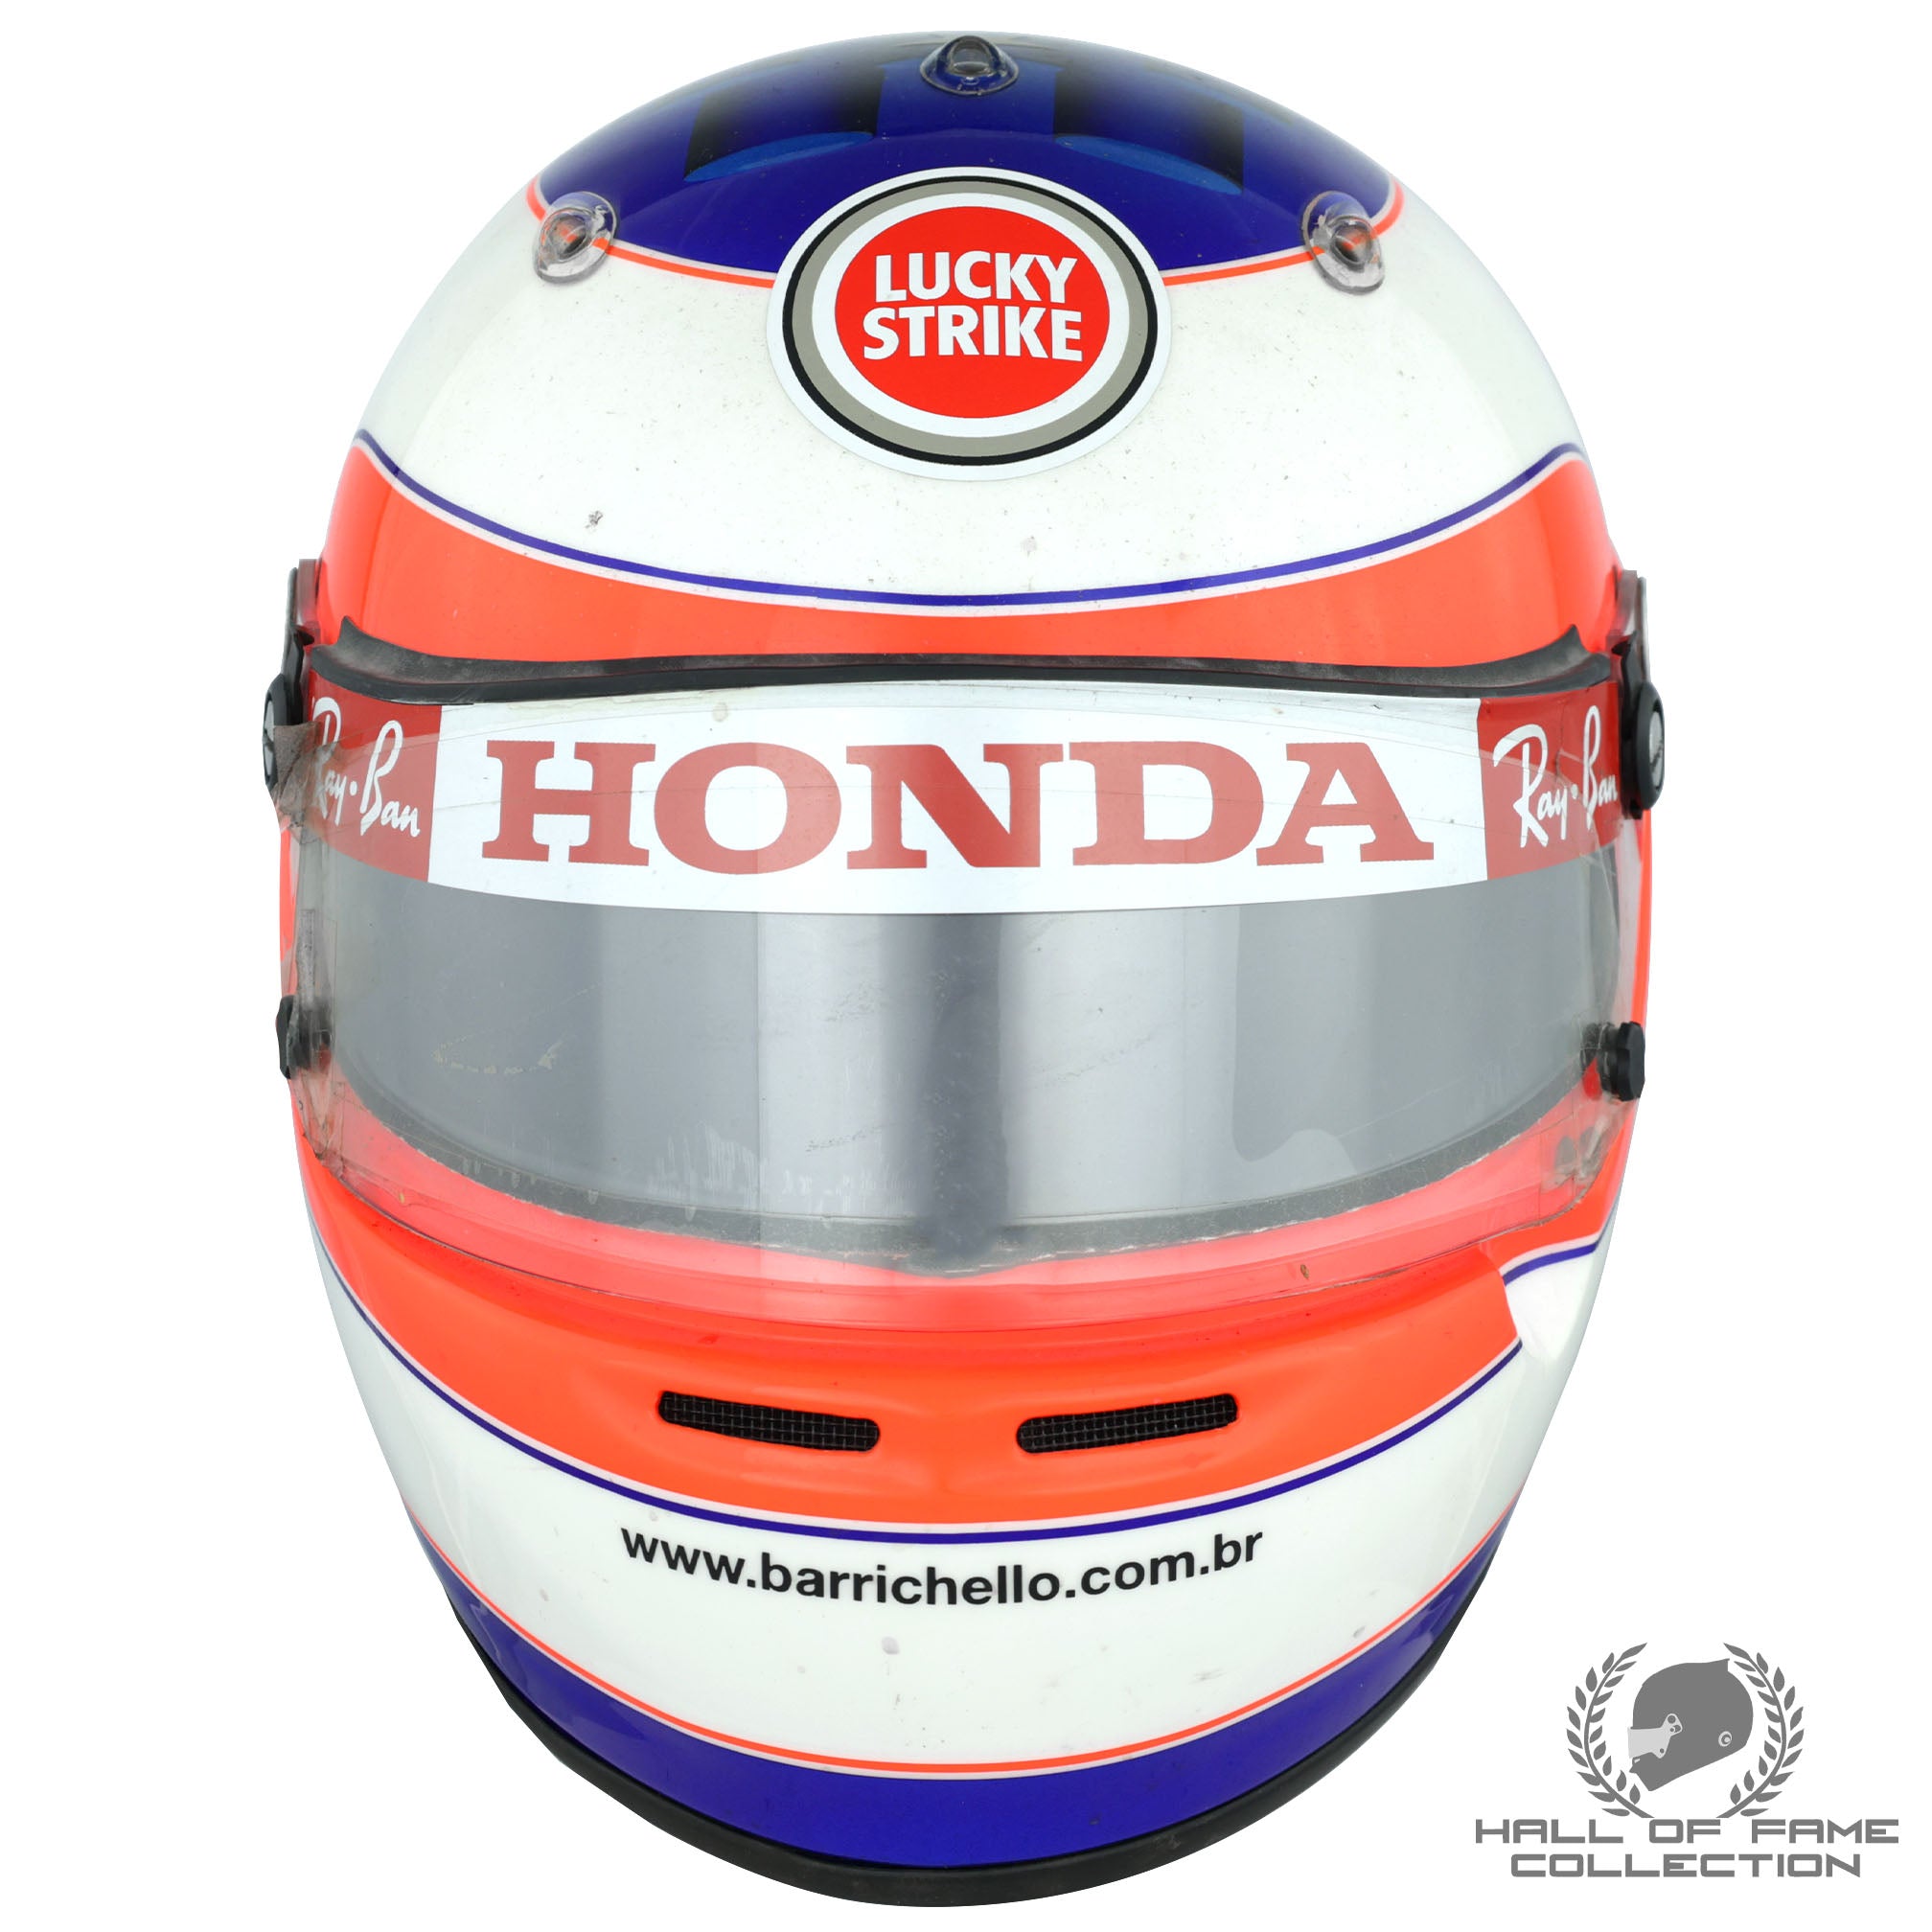 2006 Rubens Barrichello Signed China Japan Race Used Lucky Strike Honda F1 Helmet